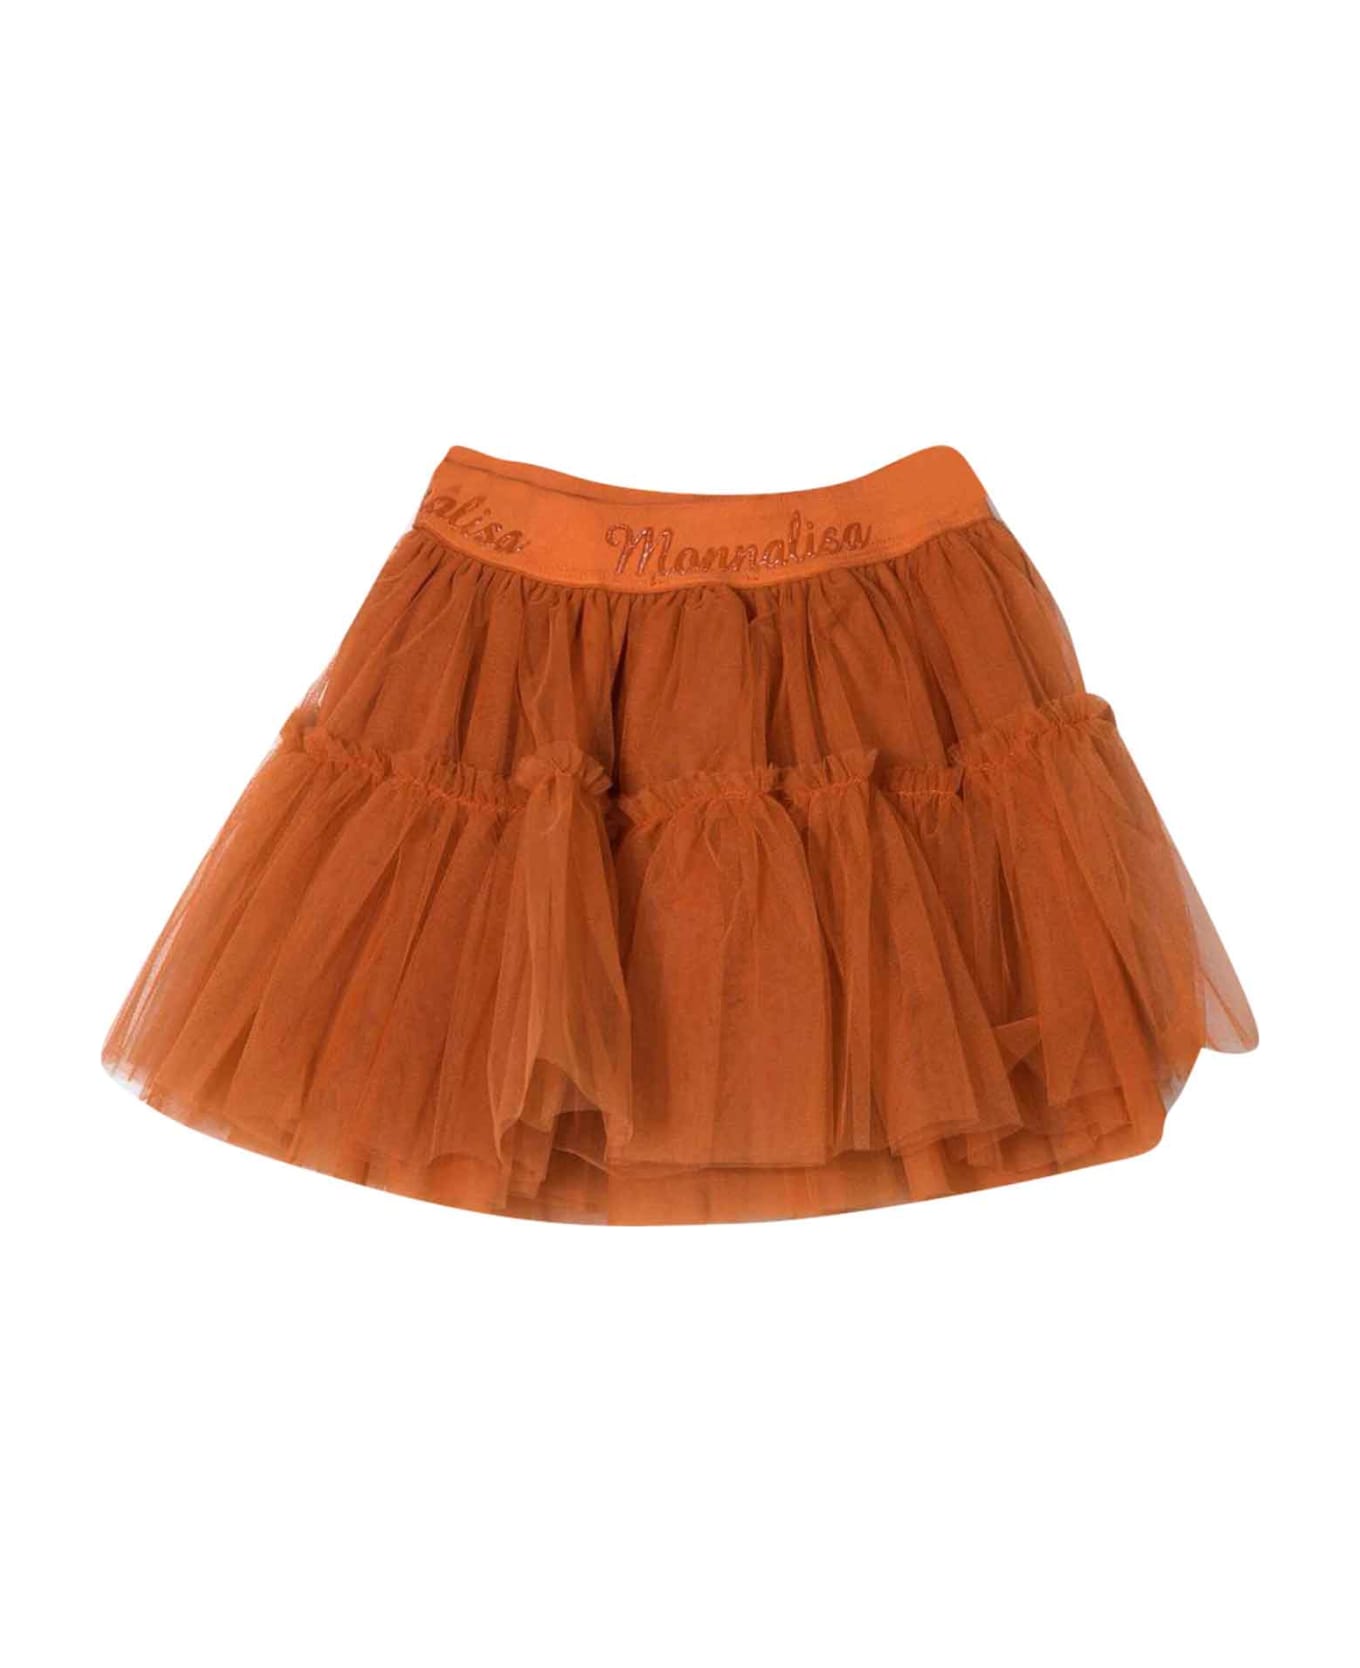 Monnalisa Orange Skirt Girl - ORANGE